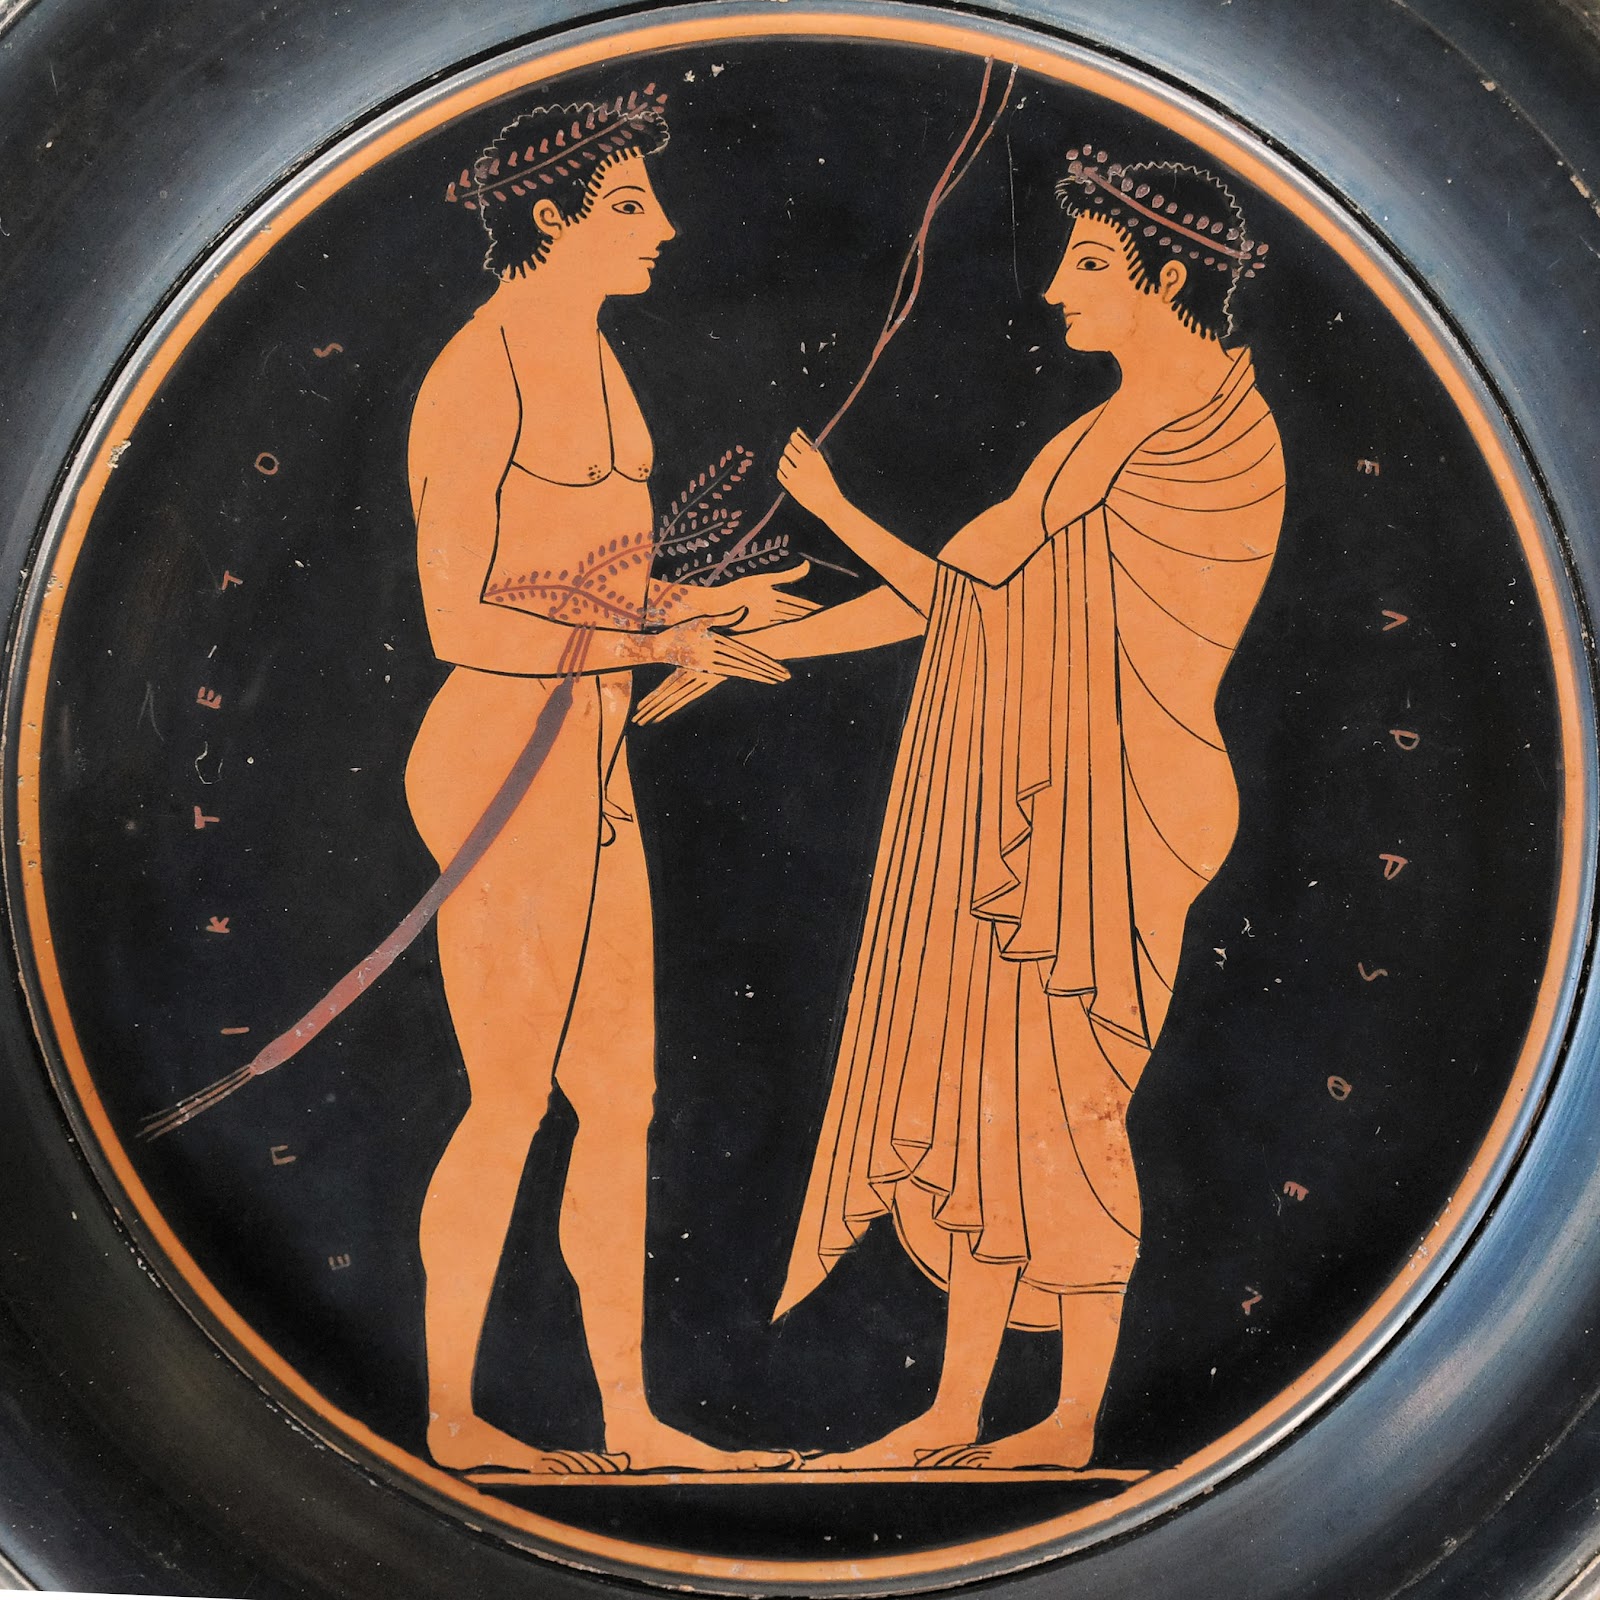 Ancient Greek wrestling